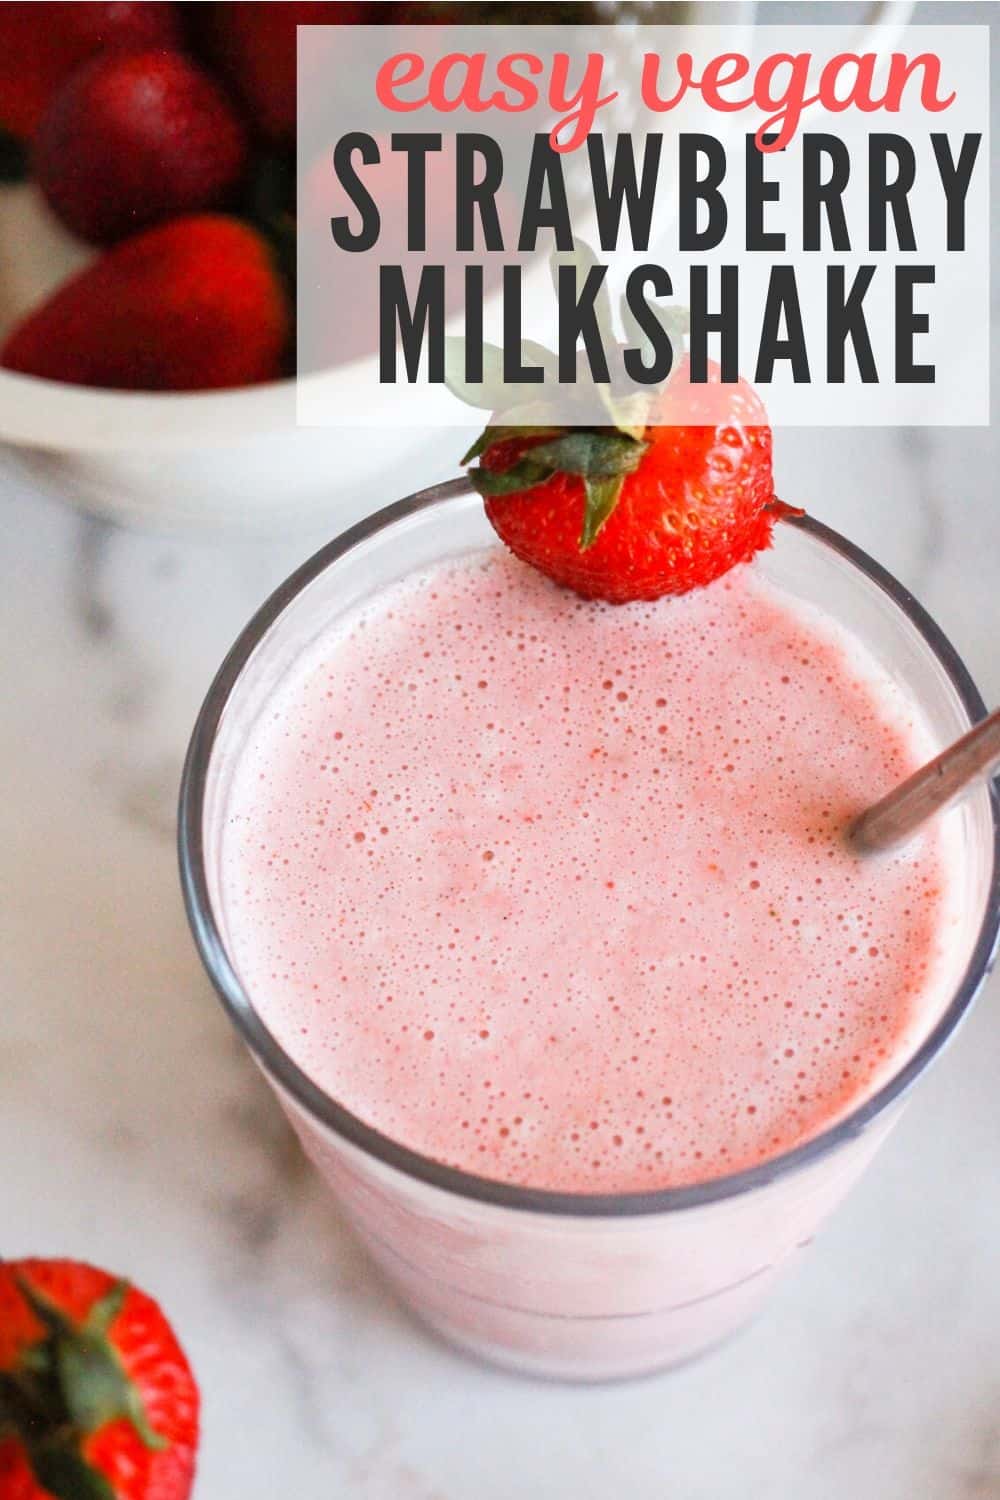 Dairy-free strawberry milkshake in a glass with text reading, "easy vegan strawberry milkshake."